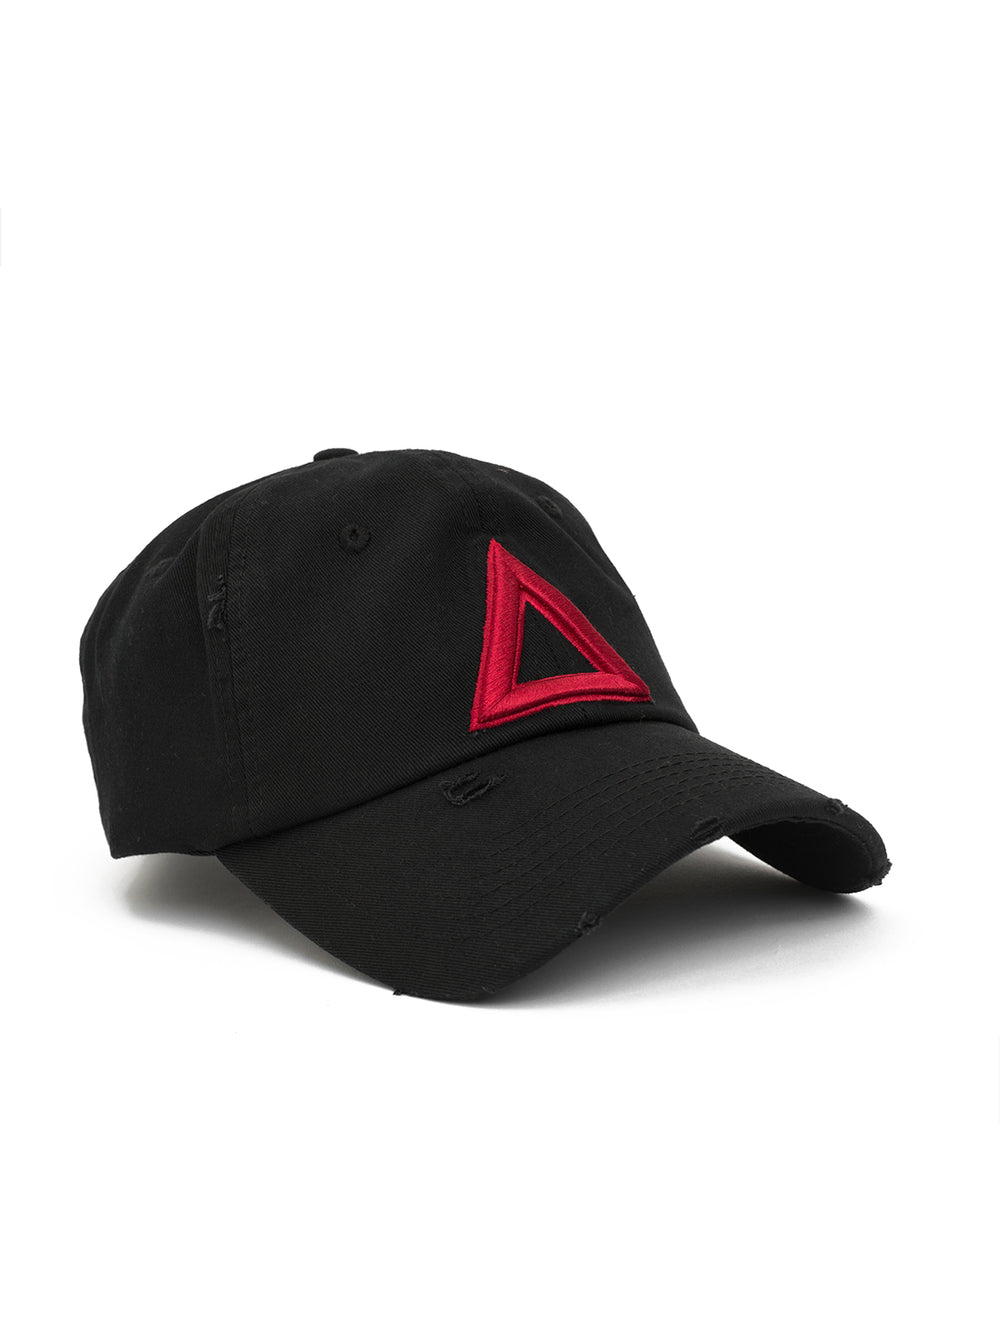 DISTRESS DAD HAT BLACK - Red TRI - Triangulo Swag